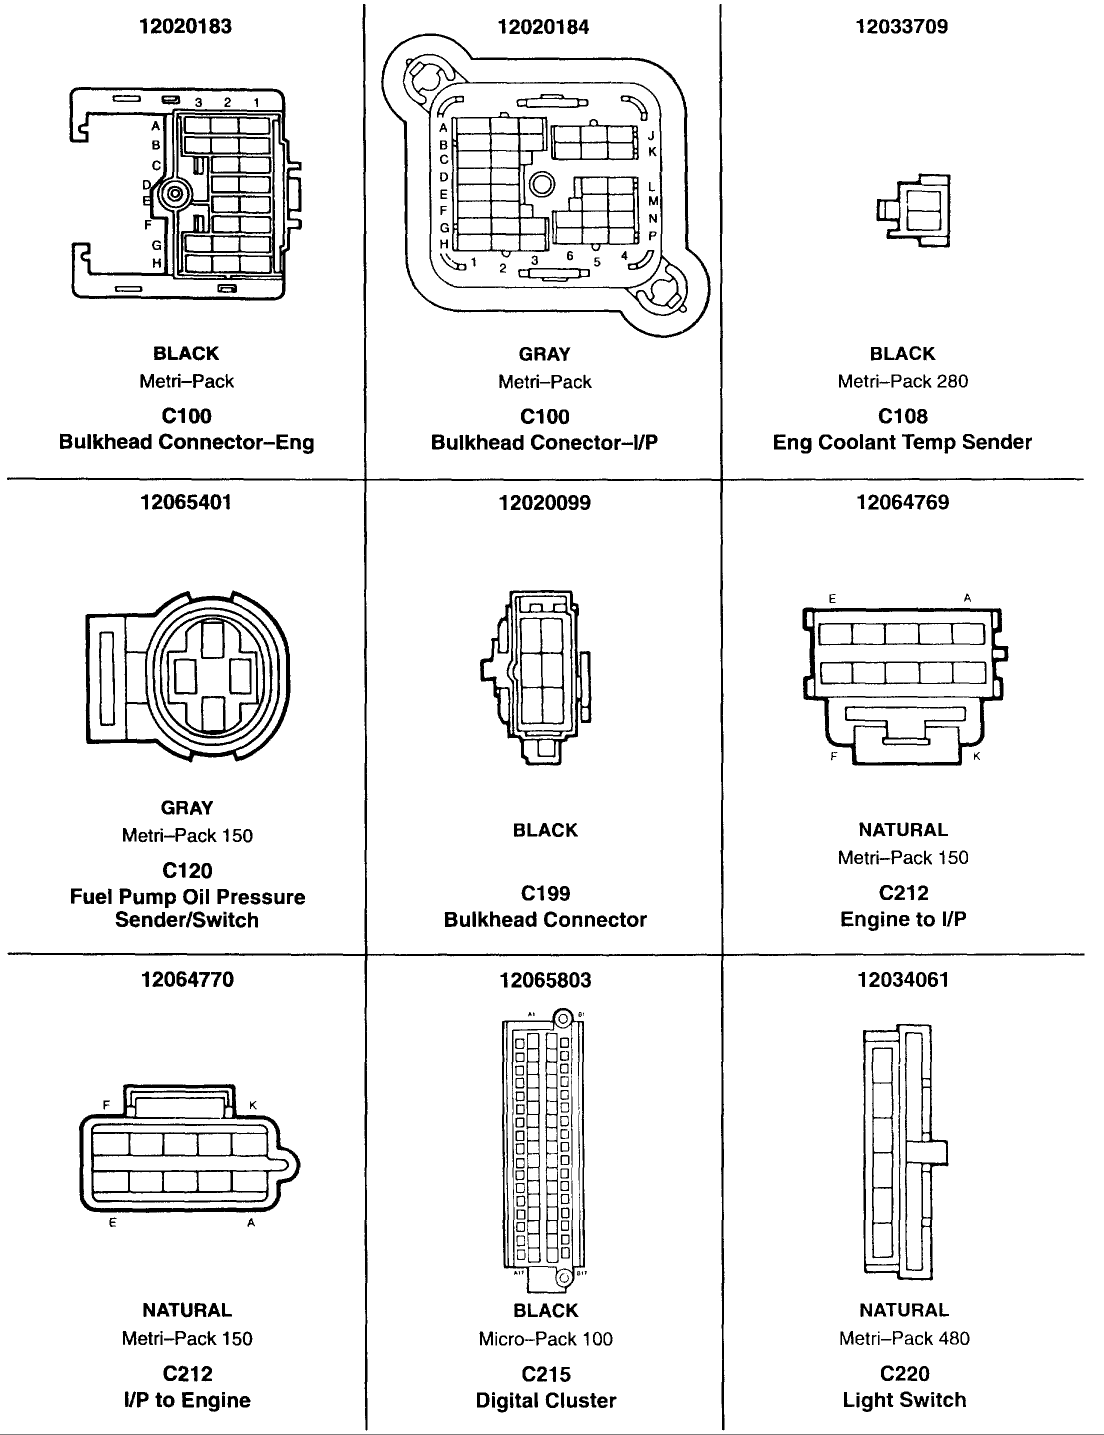 1993 gmc sierra 4.3 fire wall wiring diagram